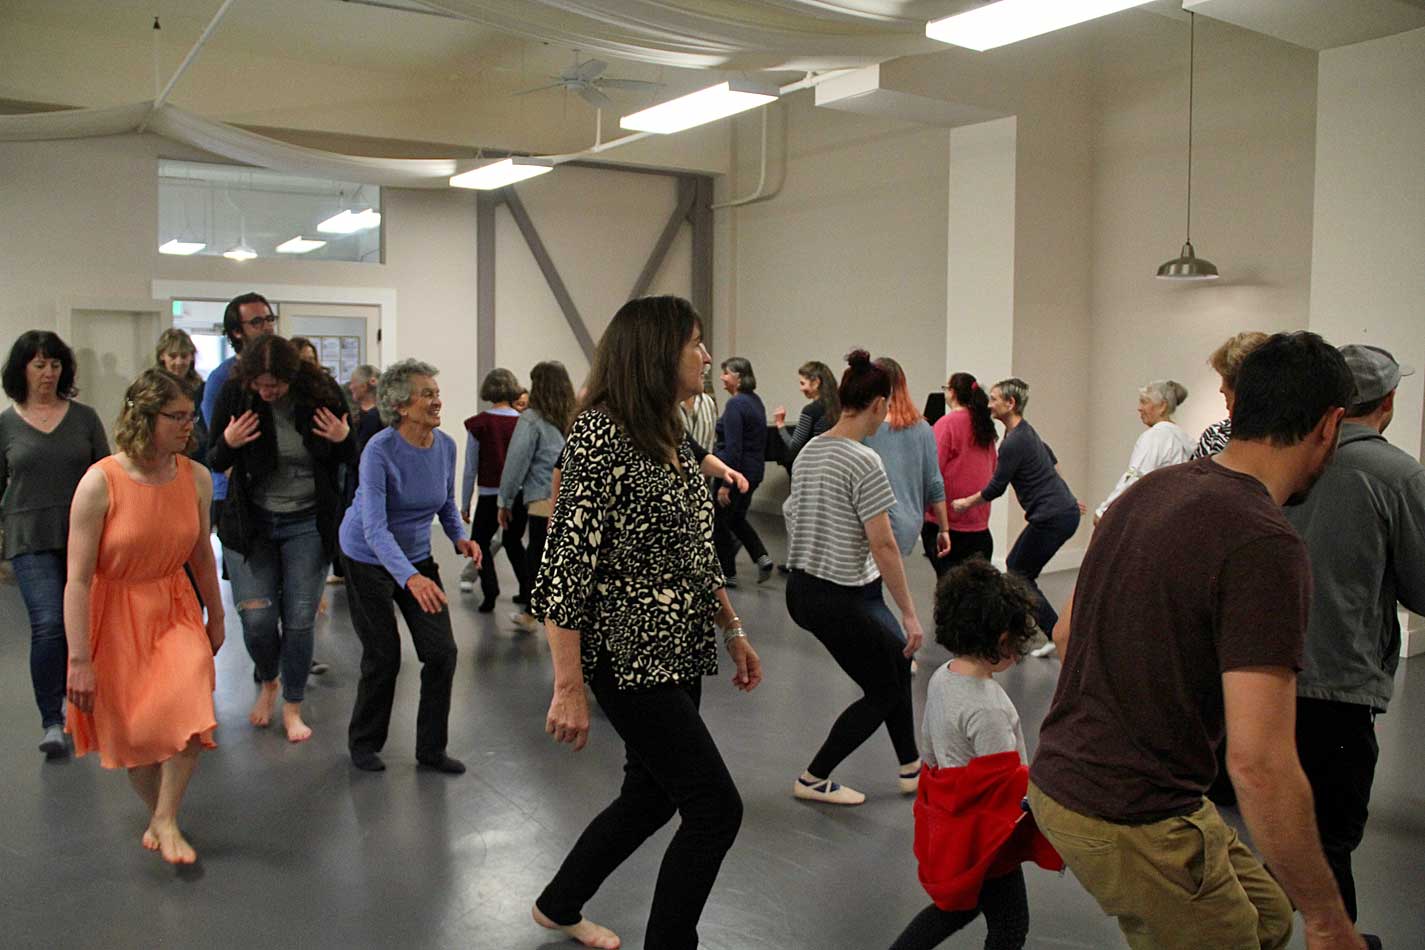 Up Close at the Dance Hub, April 2019